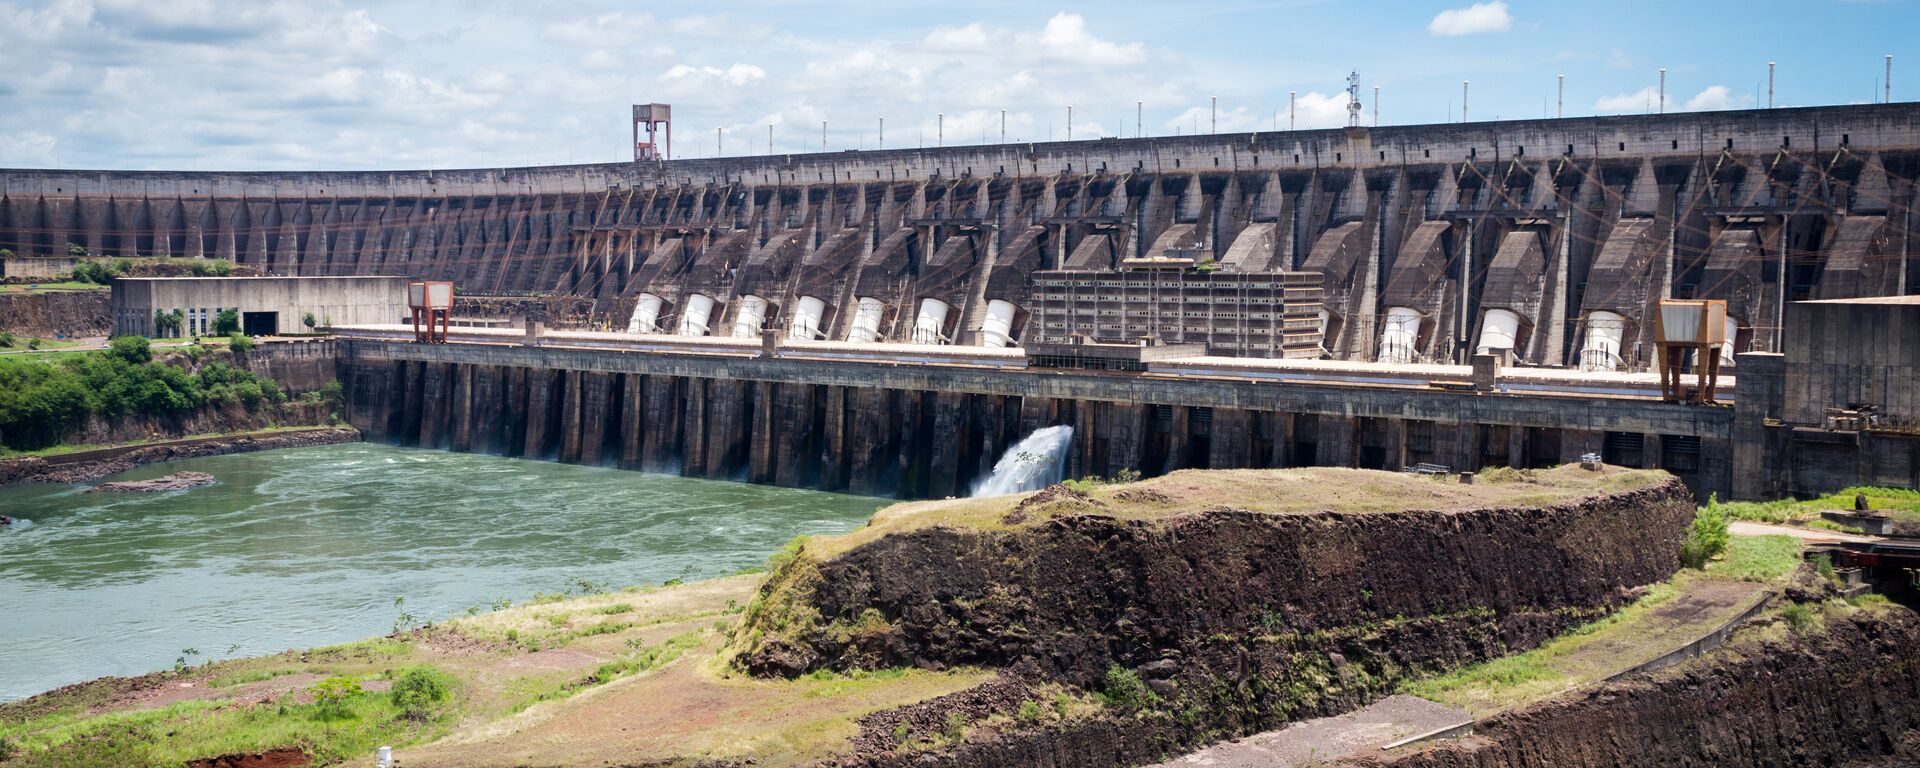 La represa hidroeléctrica de Itaipú - Sputnik Mundo, 1920, 28.08.2017